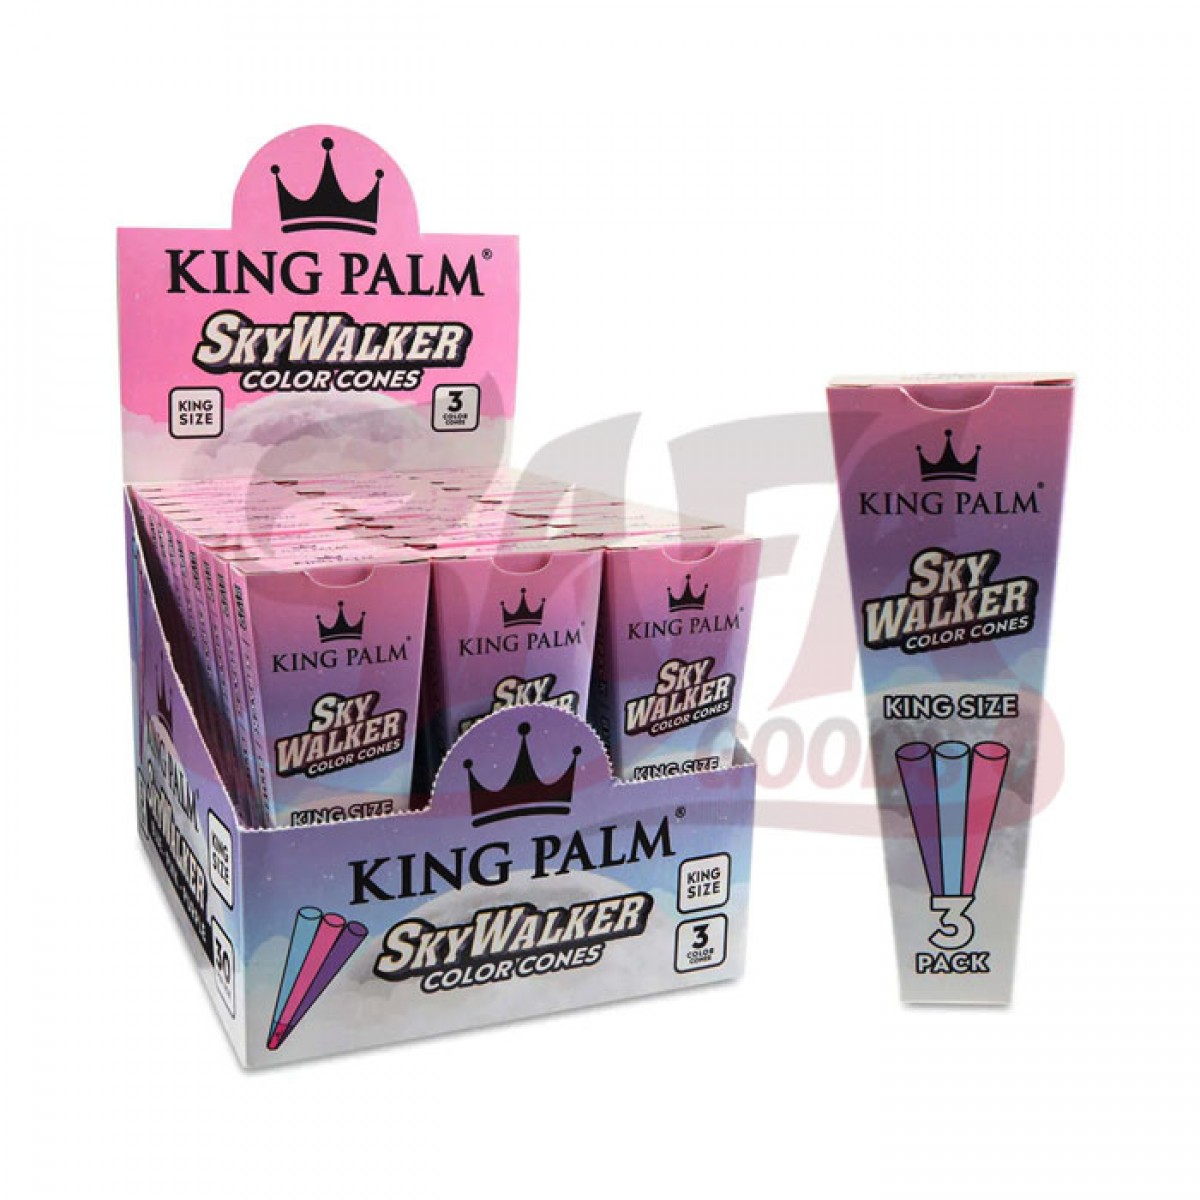 King Palm Skywalker Color Cones [King Size] - 30CT / 3PK